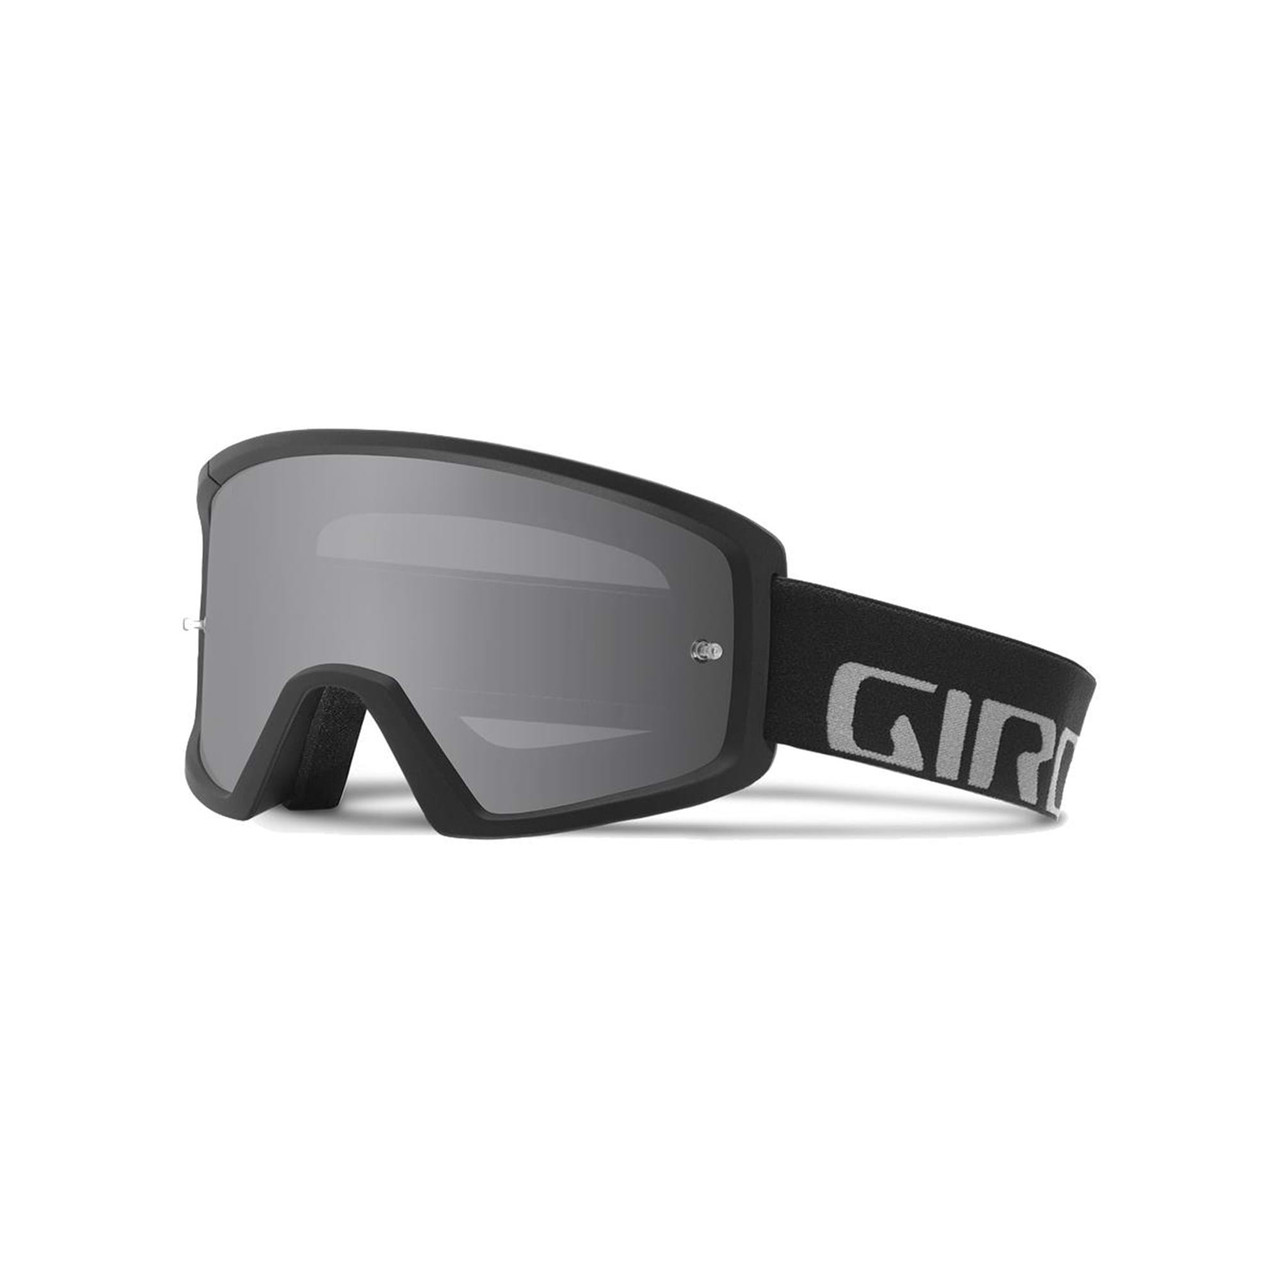 Giro Blok MTB Goggles Black/Grey With Smoke Lens RRP £90